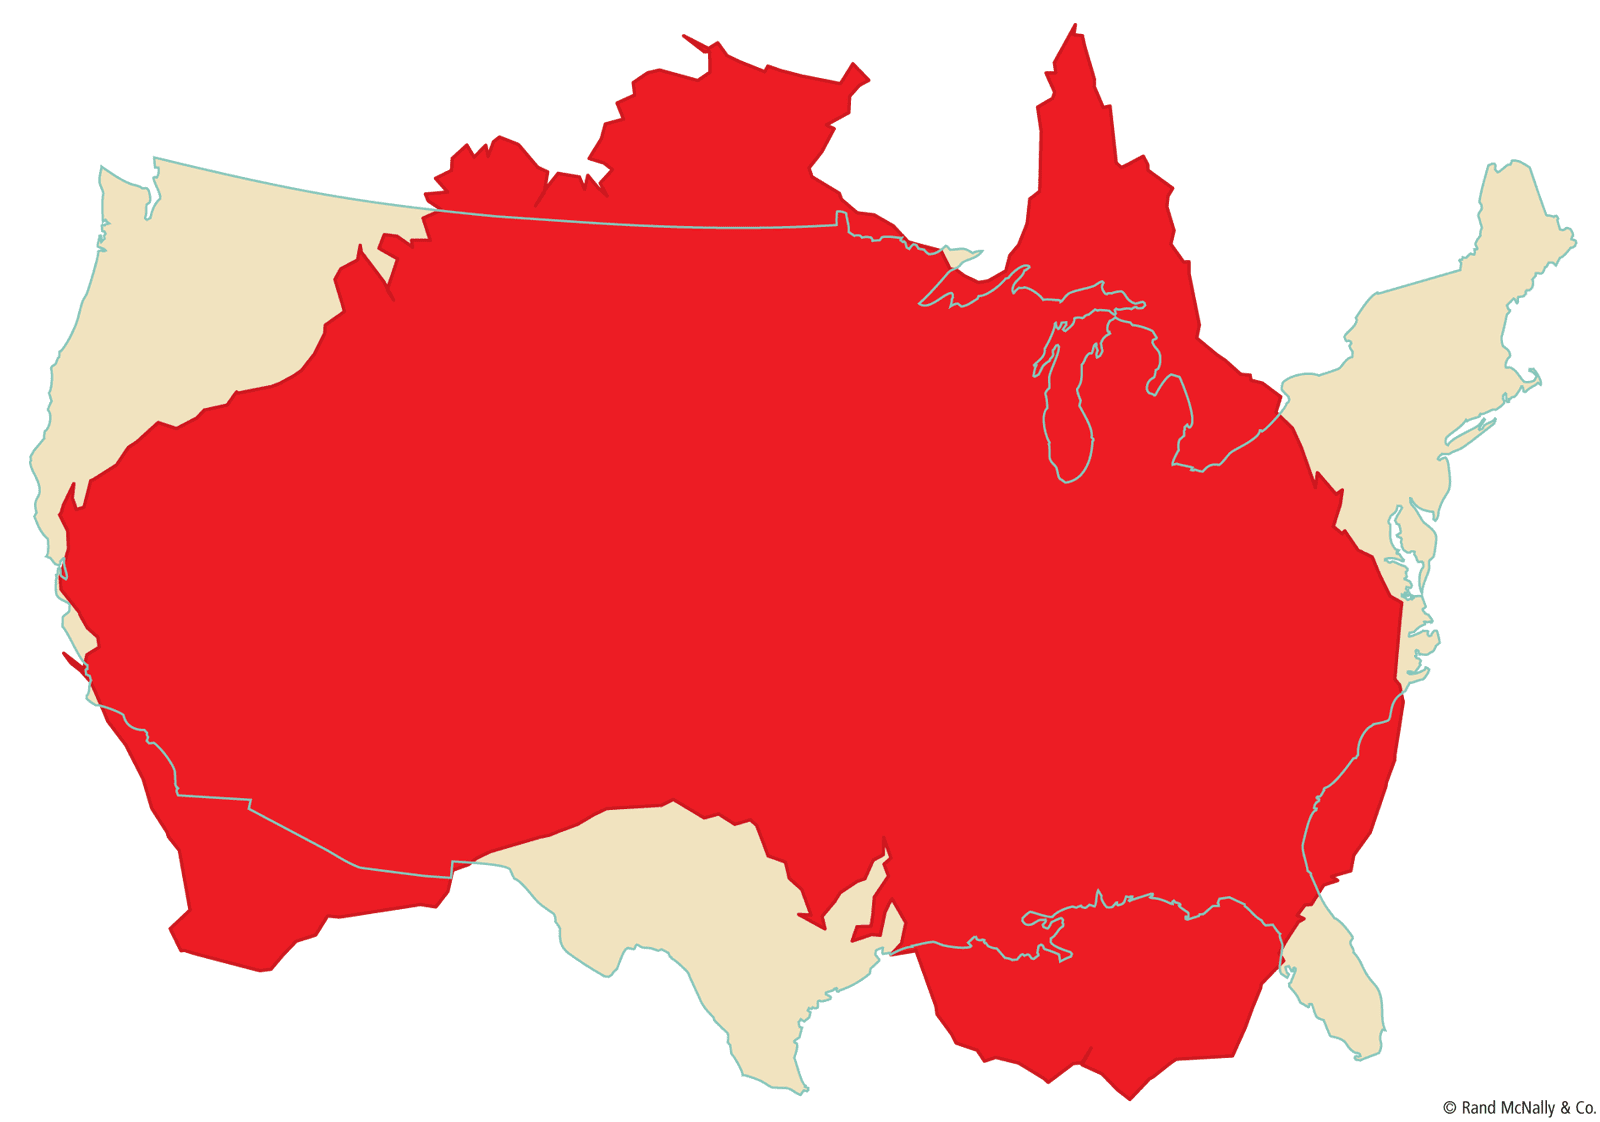 3910-australia-size-comparison-to-united-states.png